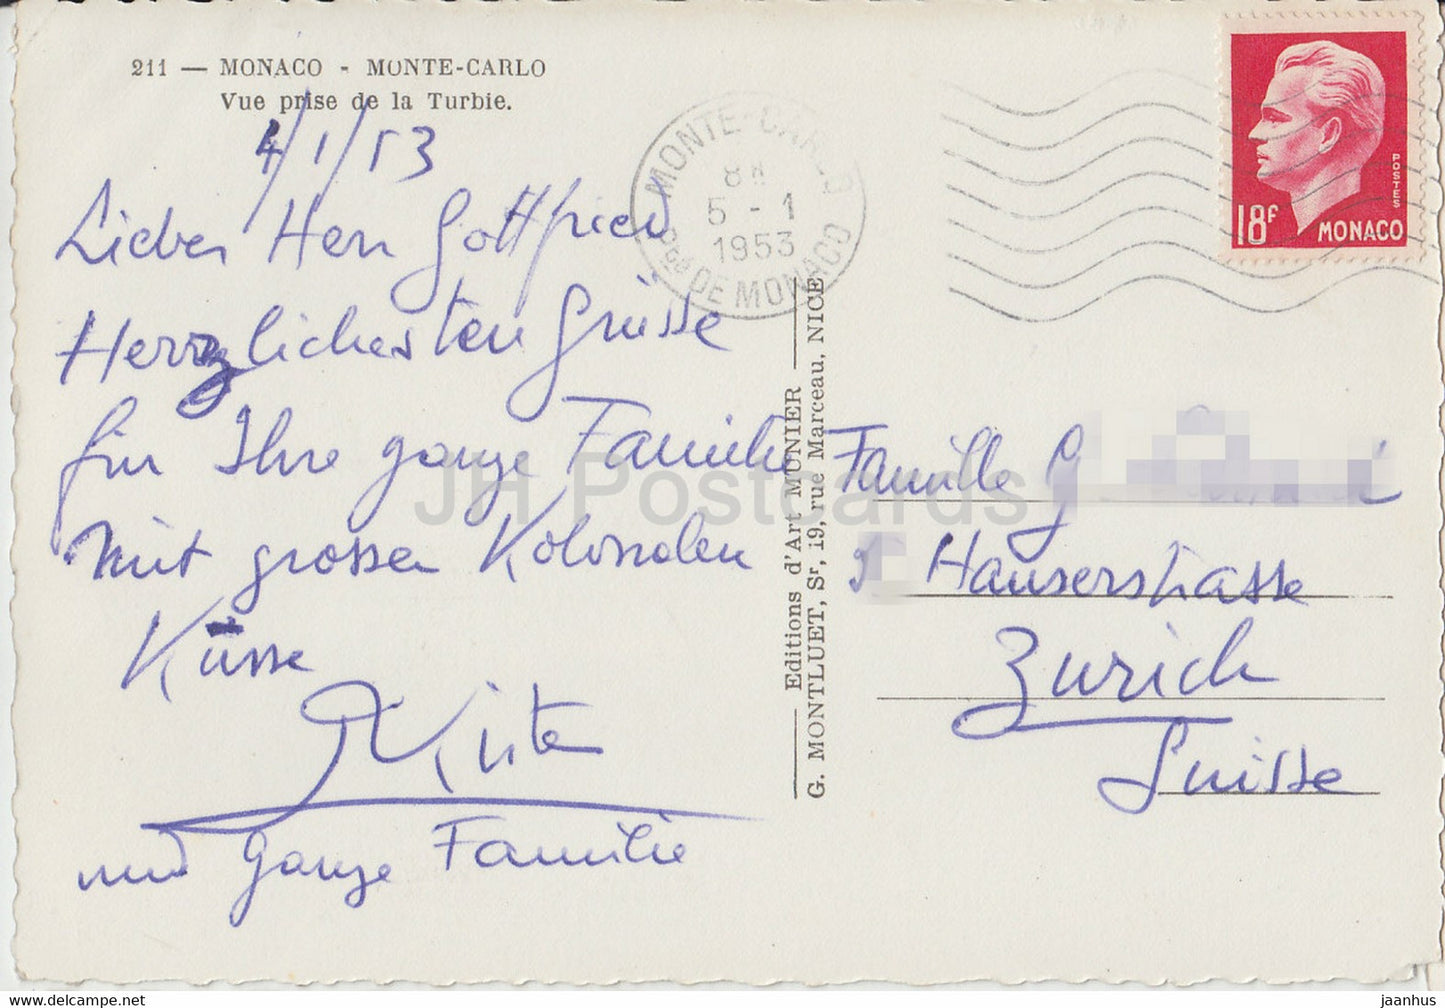 Monte Carlo - Vue prise de la Turbie - 211 - old postcard - 1953 - Monaco - used